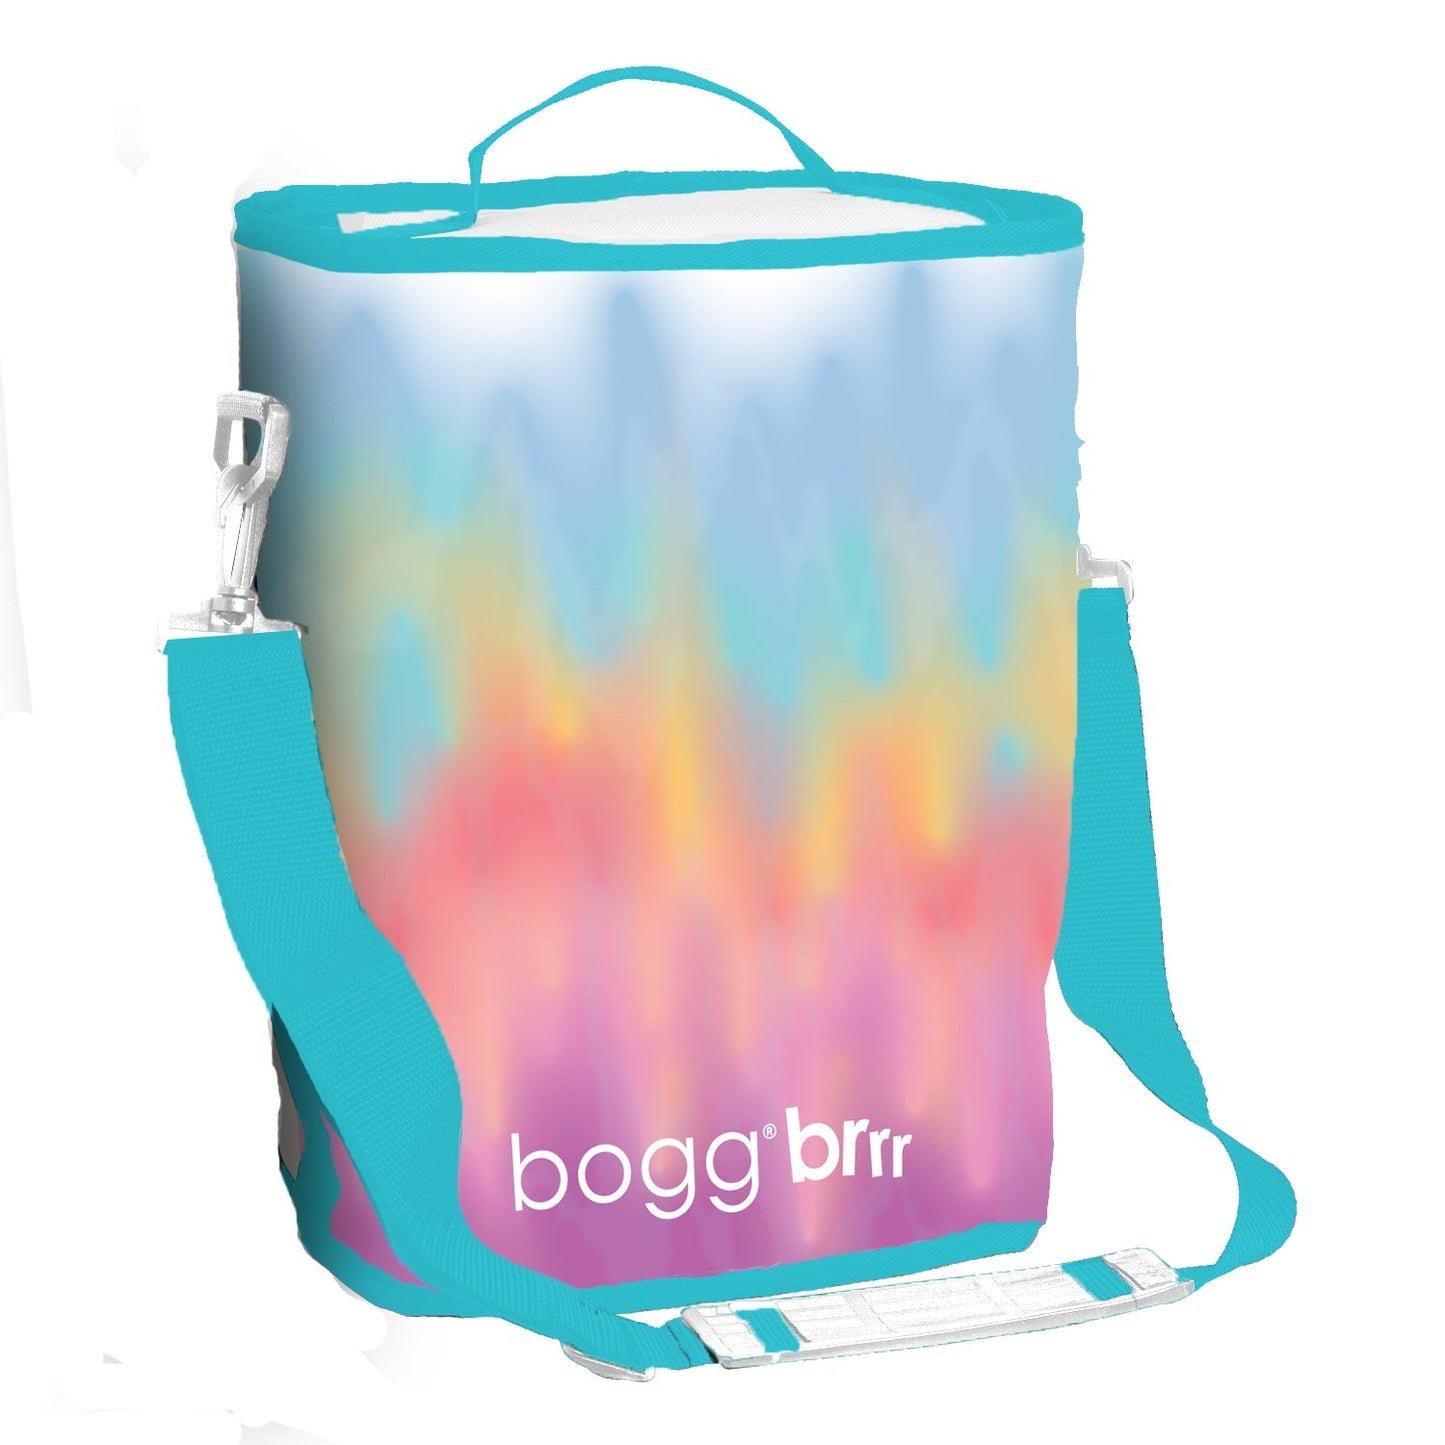 Bogg® Brrr and a Half Cooler Insert - Cotton Candy